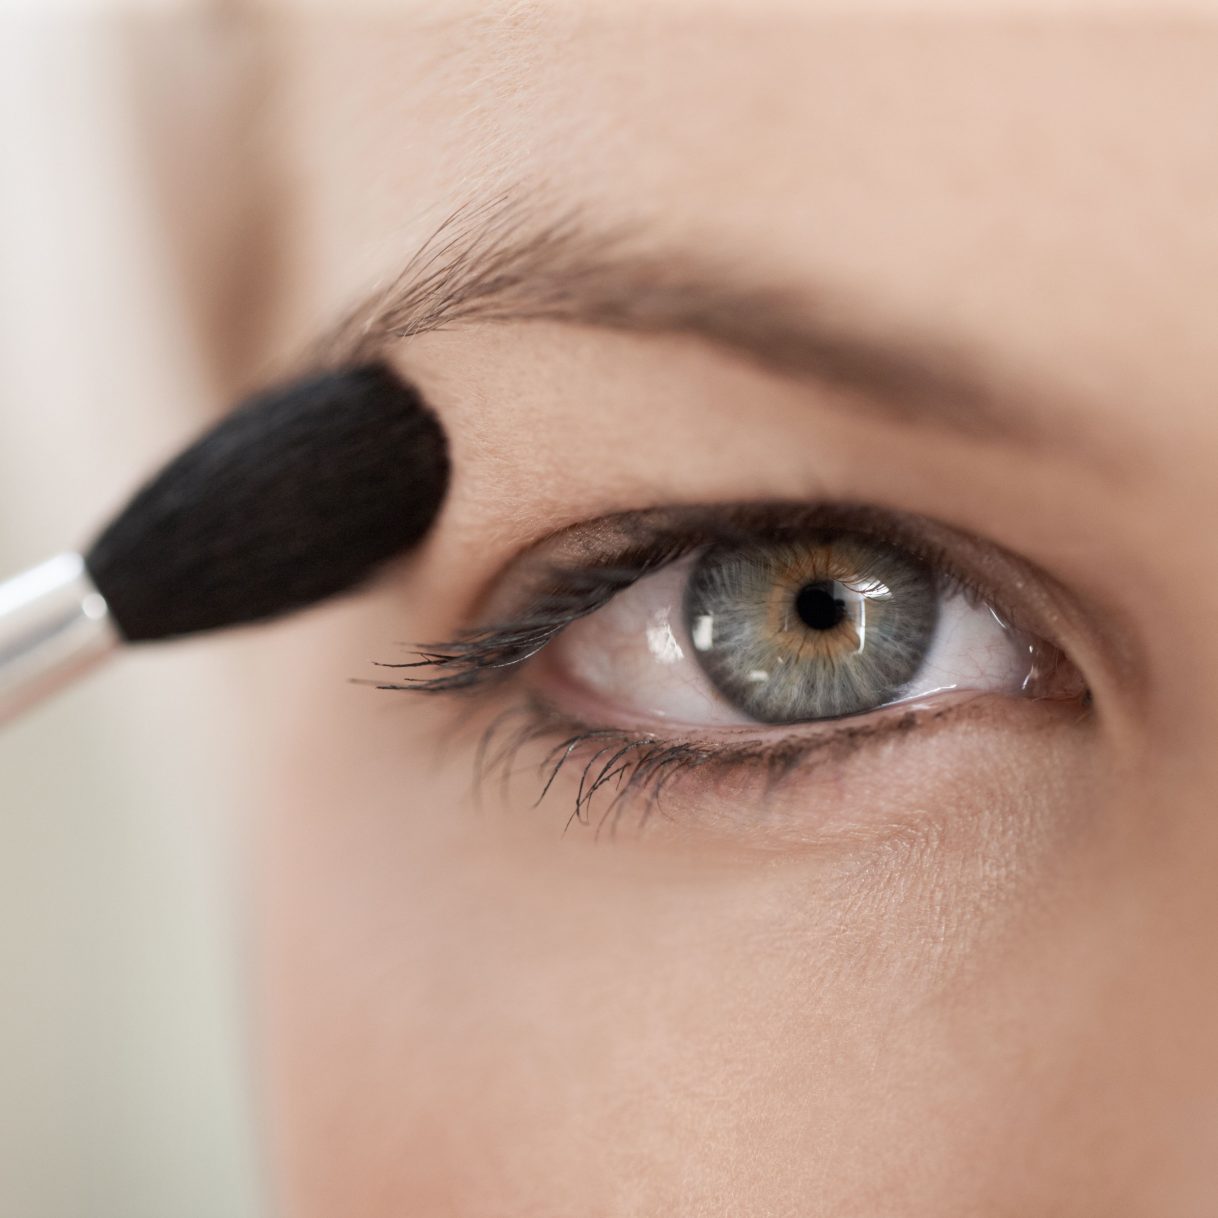 Ball Eye Makeup Makeup Tricks For Hooded Eyes Hooded Eyes Makeup Tips And Tricks